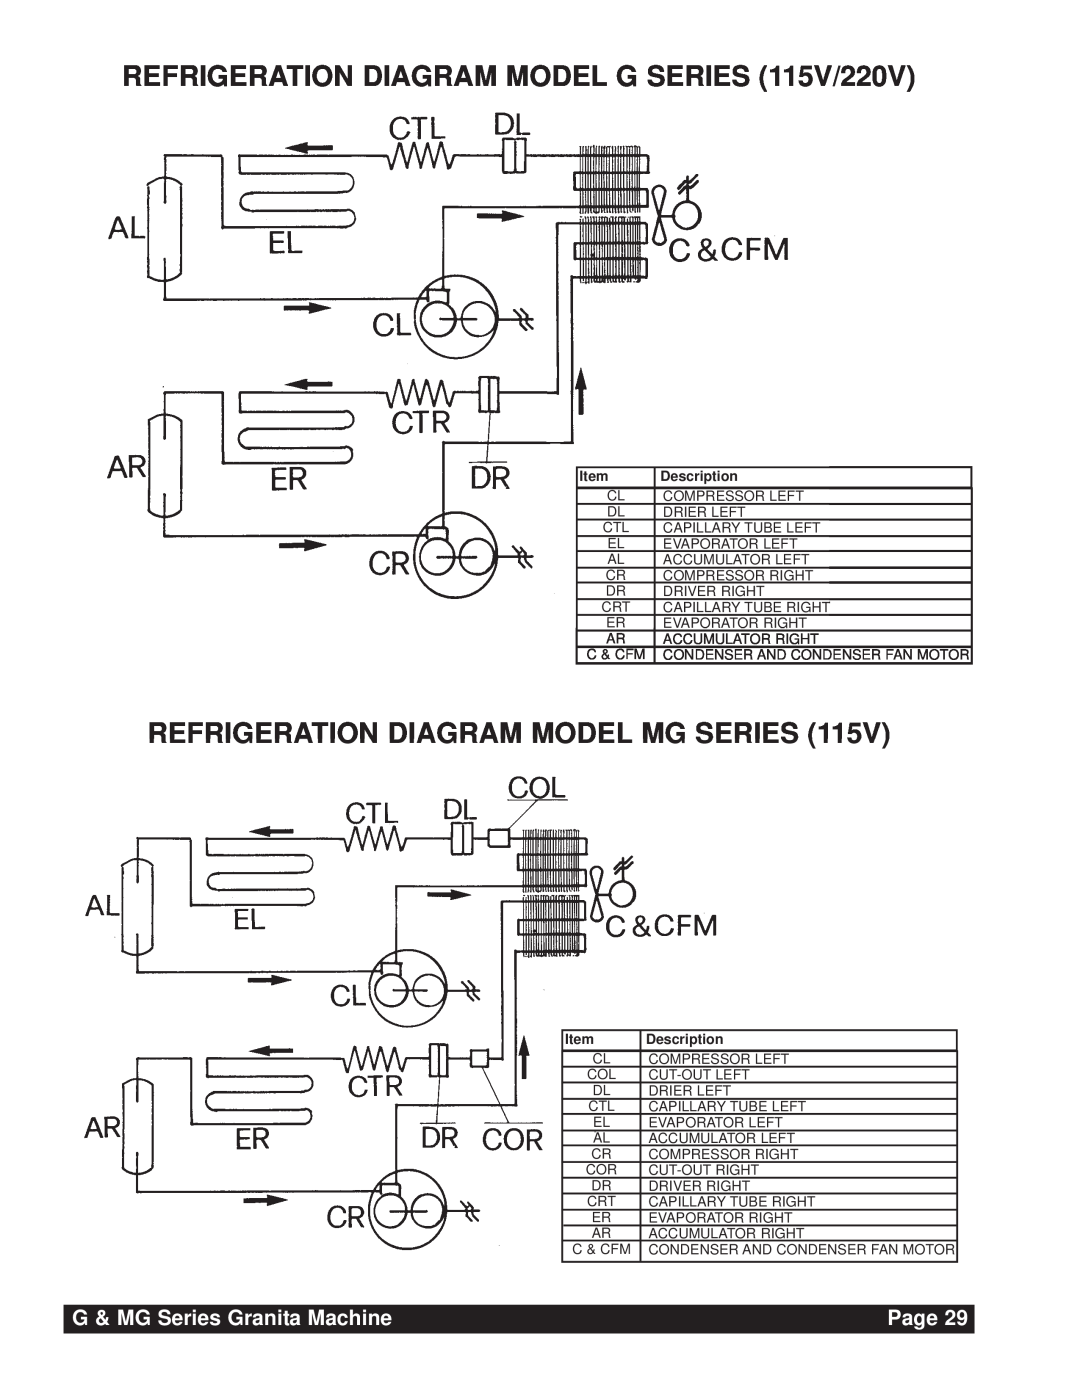 Grindmaster G & MG Series REFRIGERATION DIAGRAM MODEL G SERIES 115V/220V, Refrigeration Diagram Model Mg Series, Page 